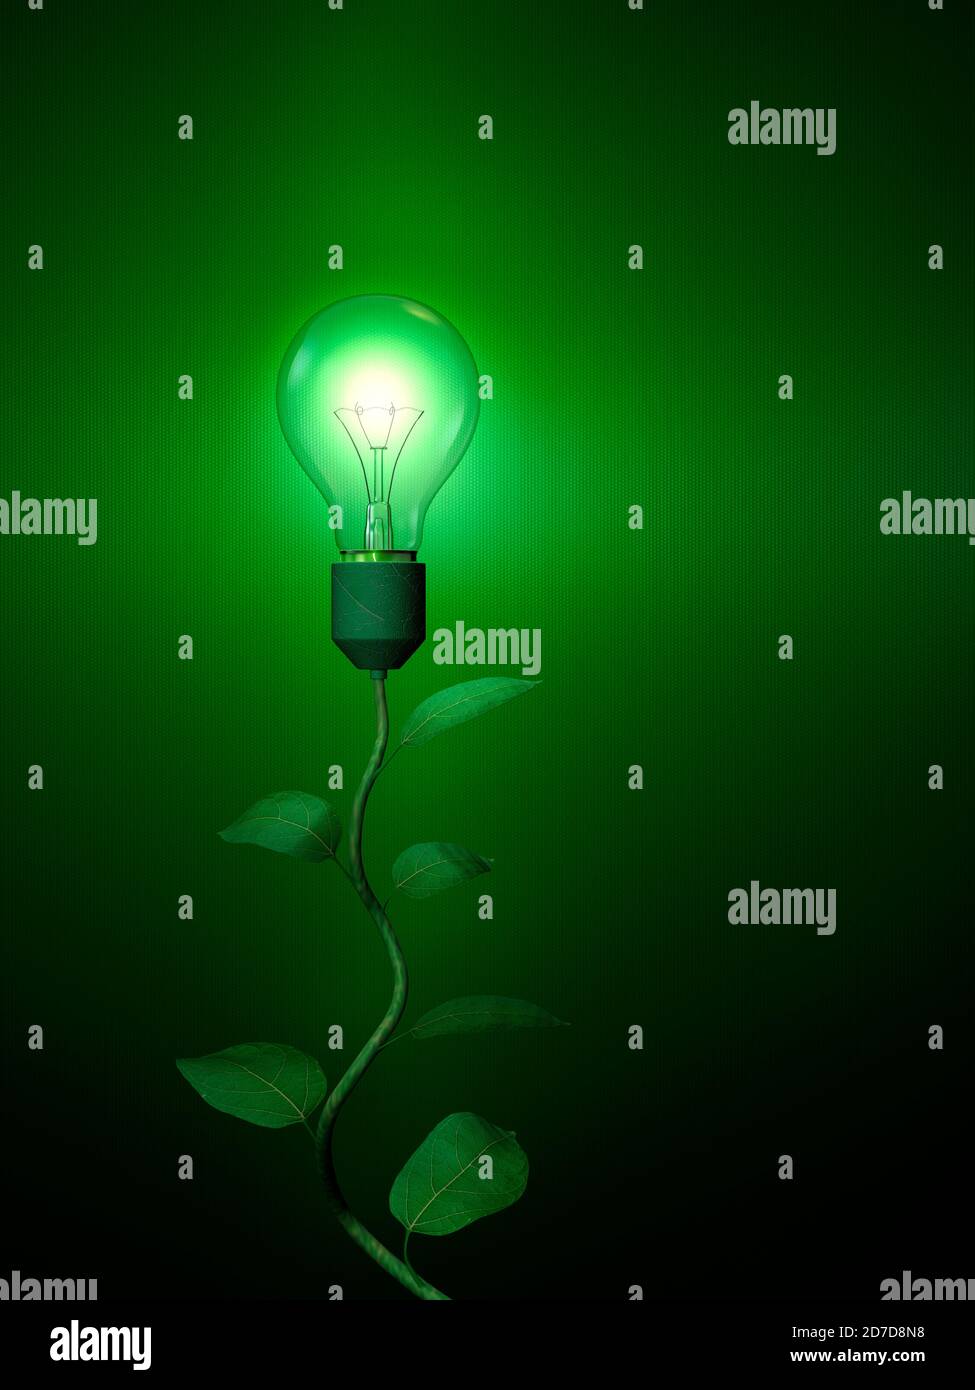 Green Light Lamp Bulb on Stem with Leaves. Green Energy Concept. 3D illustration Stock Photo